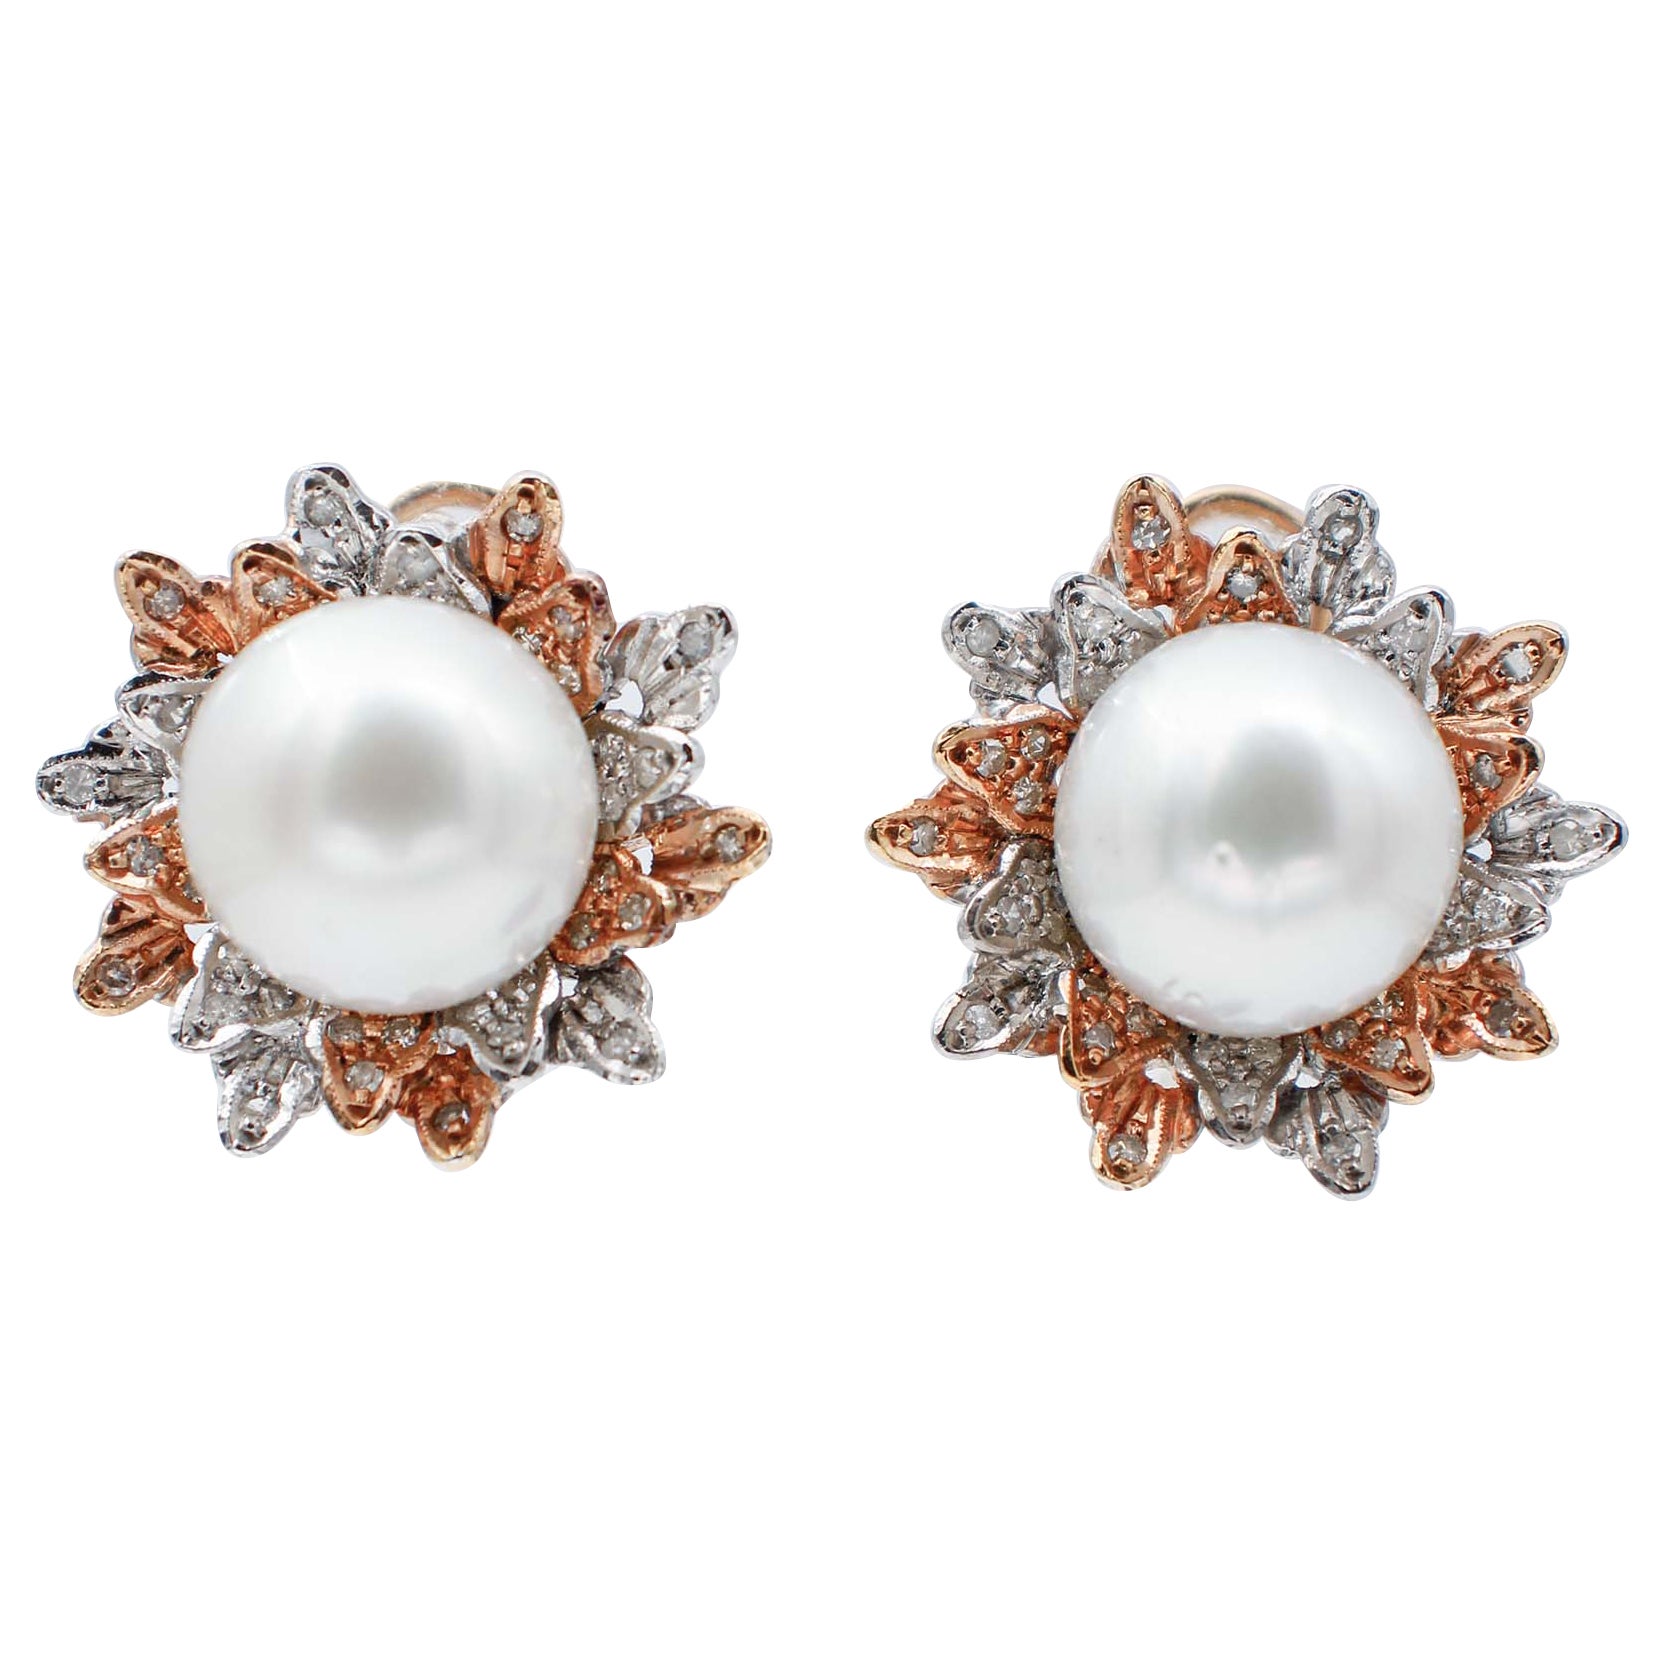 South-Sea Pearls, Diamonds, 14 Karat White and Rose Gold Stud Earrings